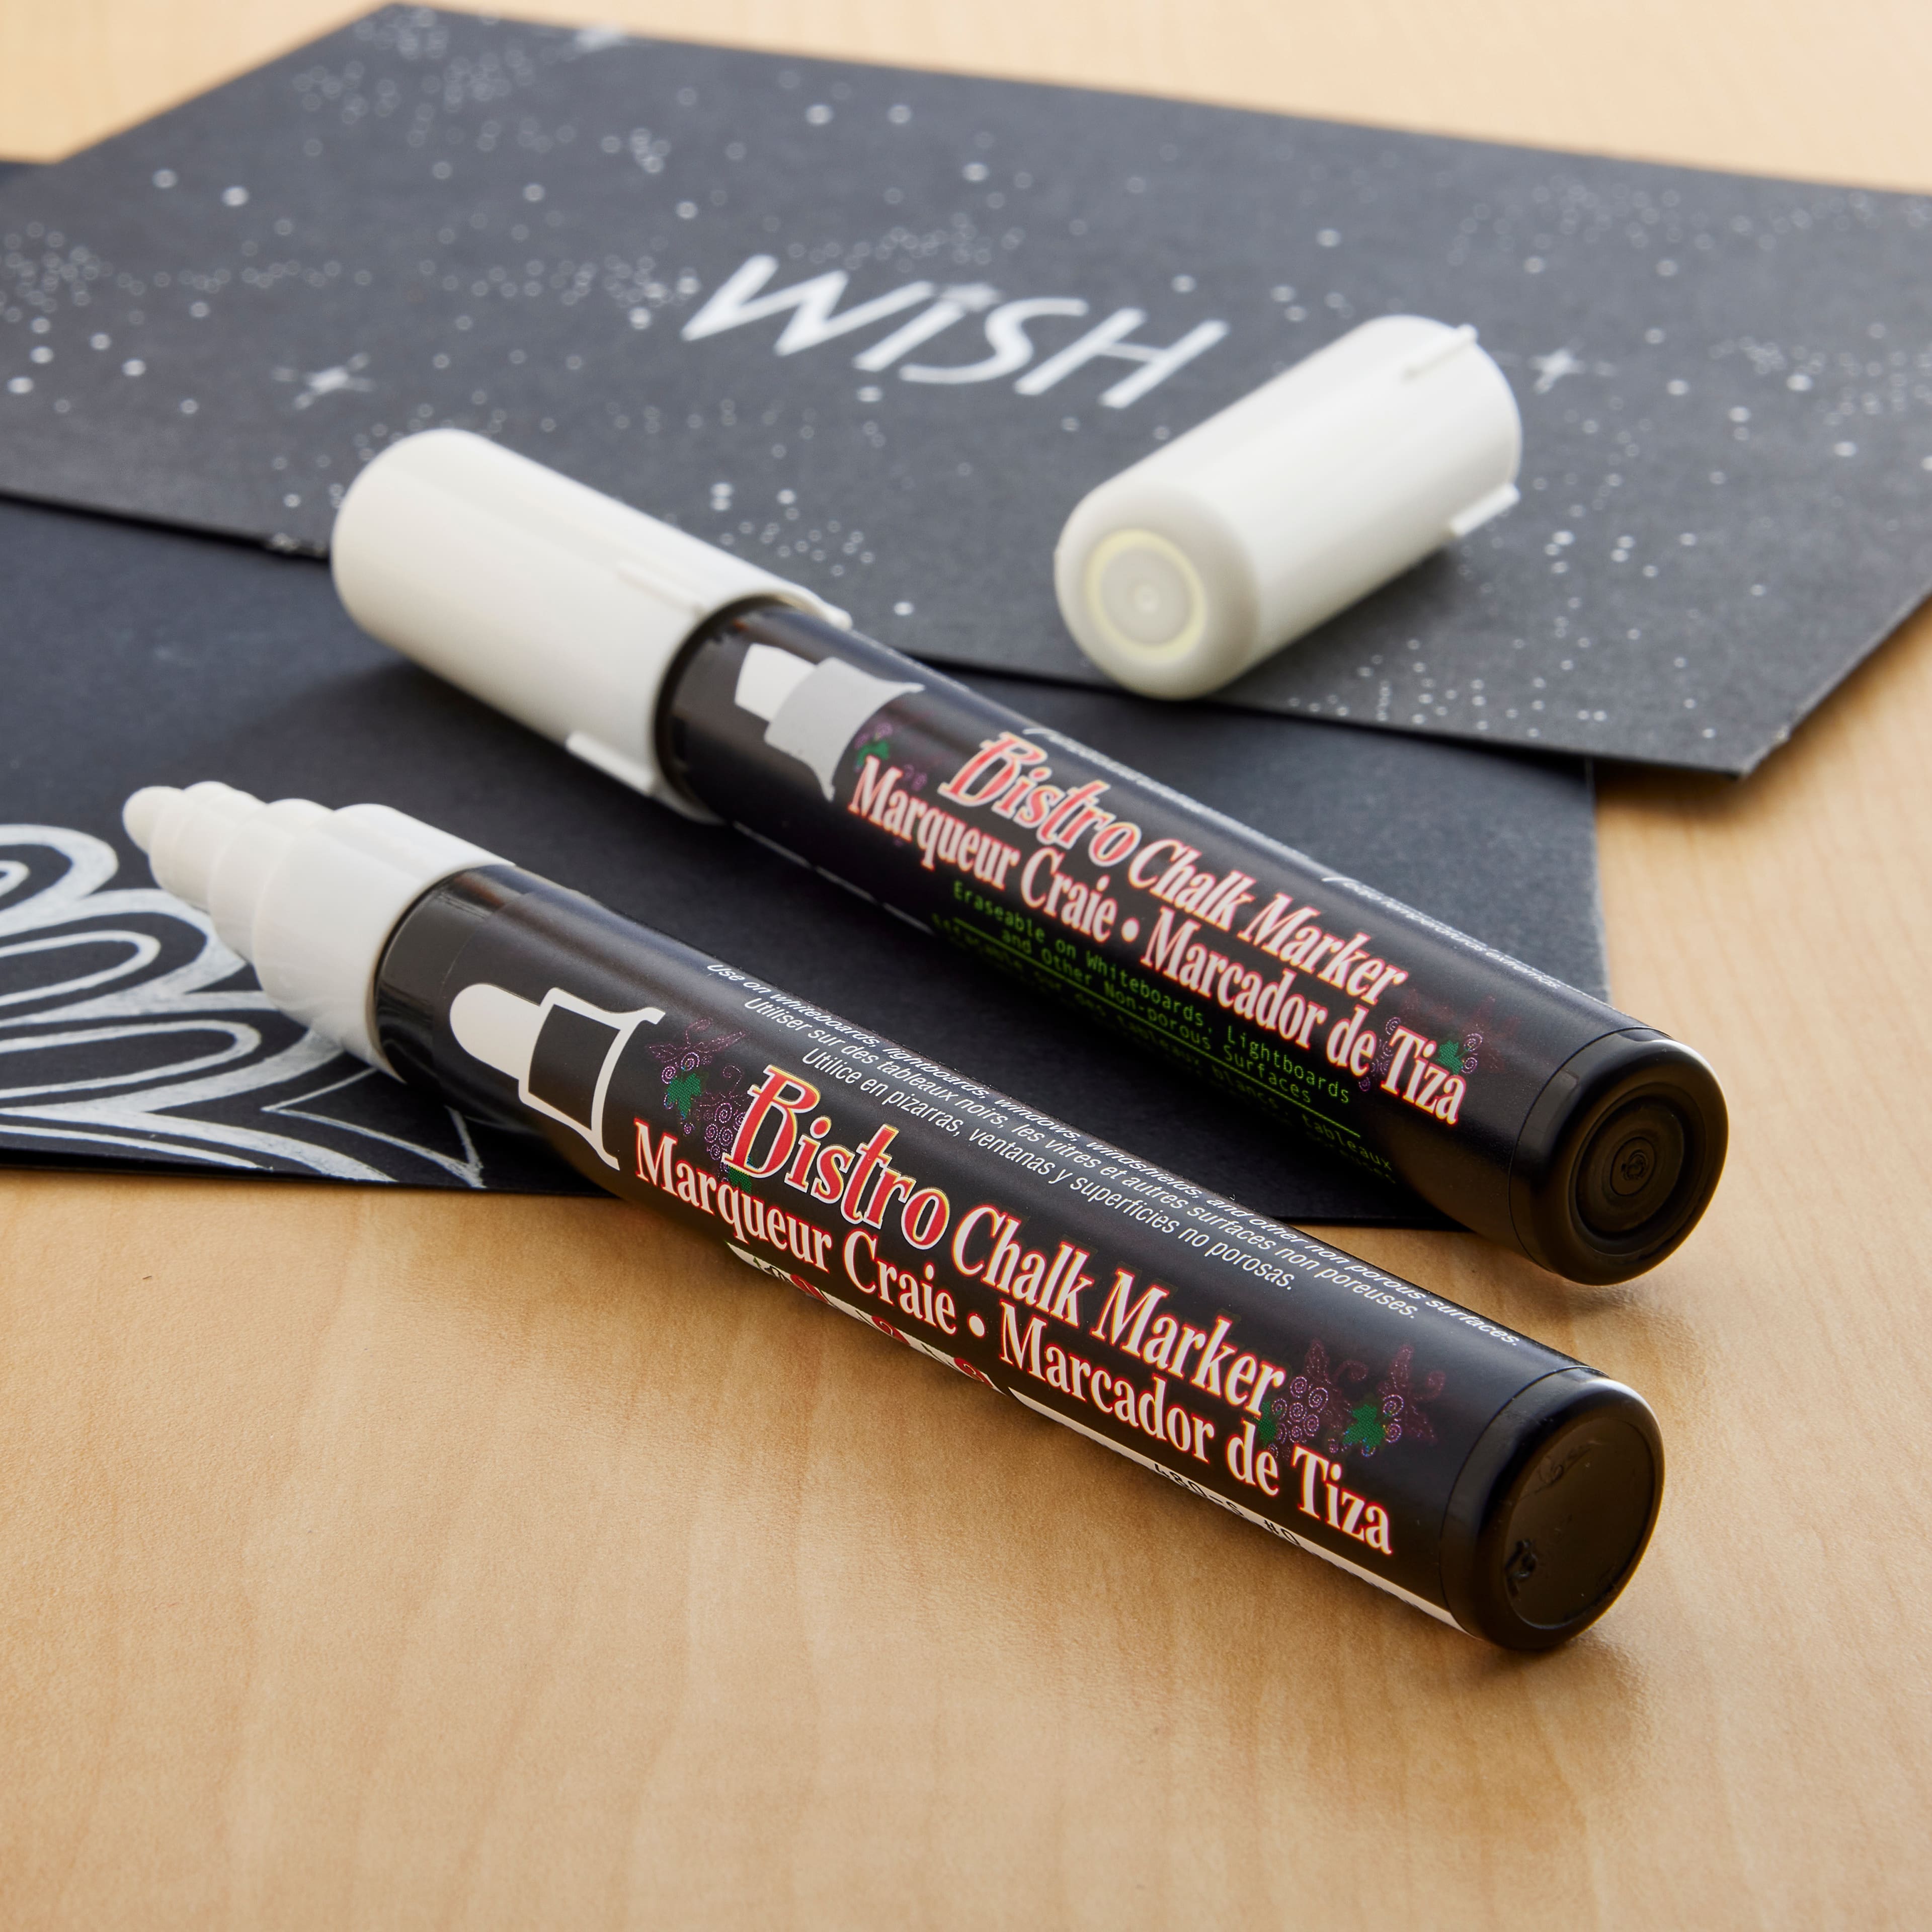 Uchida Bistro Chalk Marker, Fine Marker Set of 4 - The Art Store